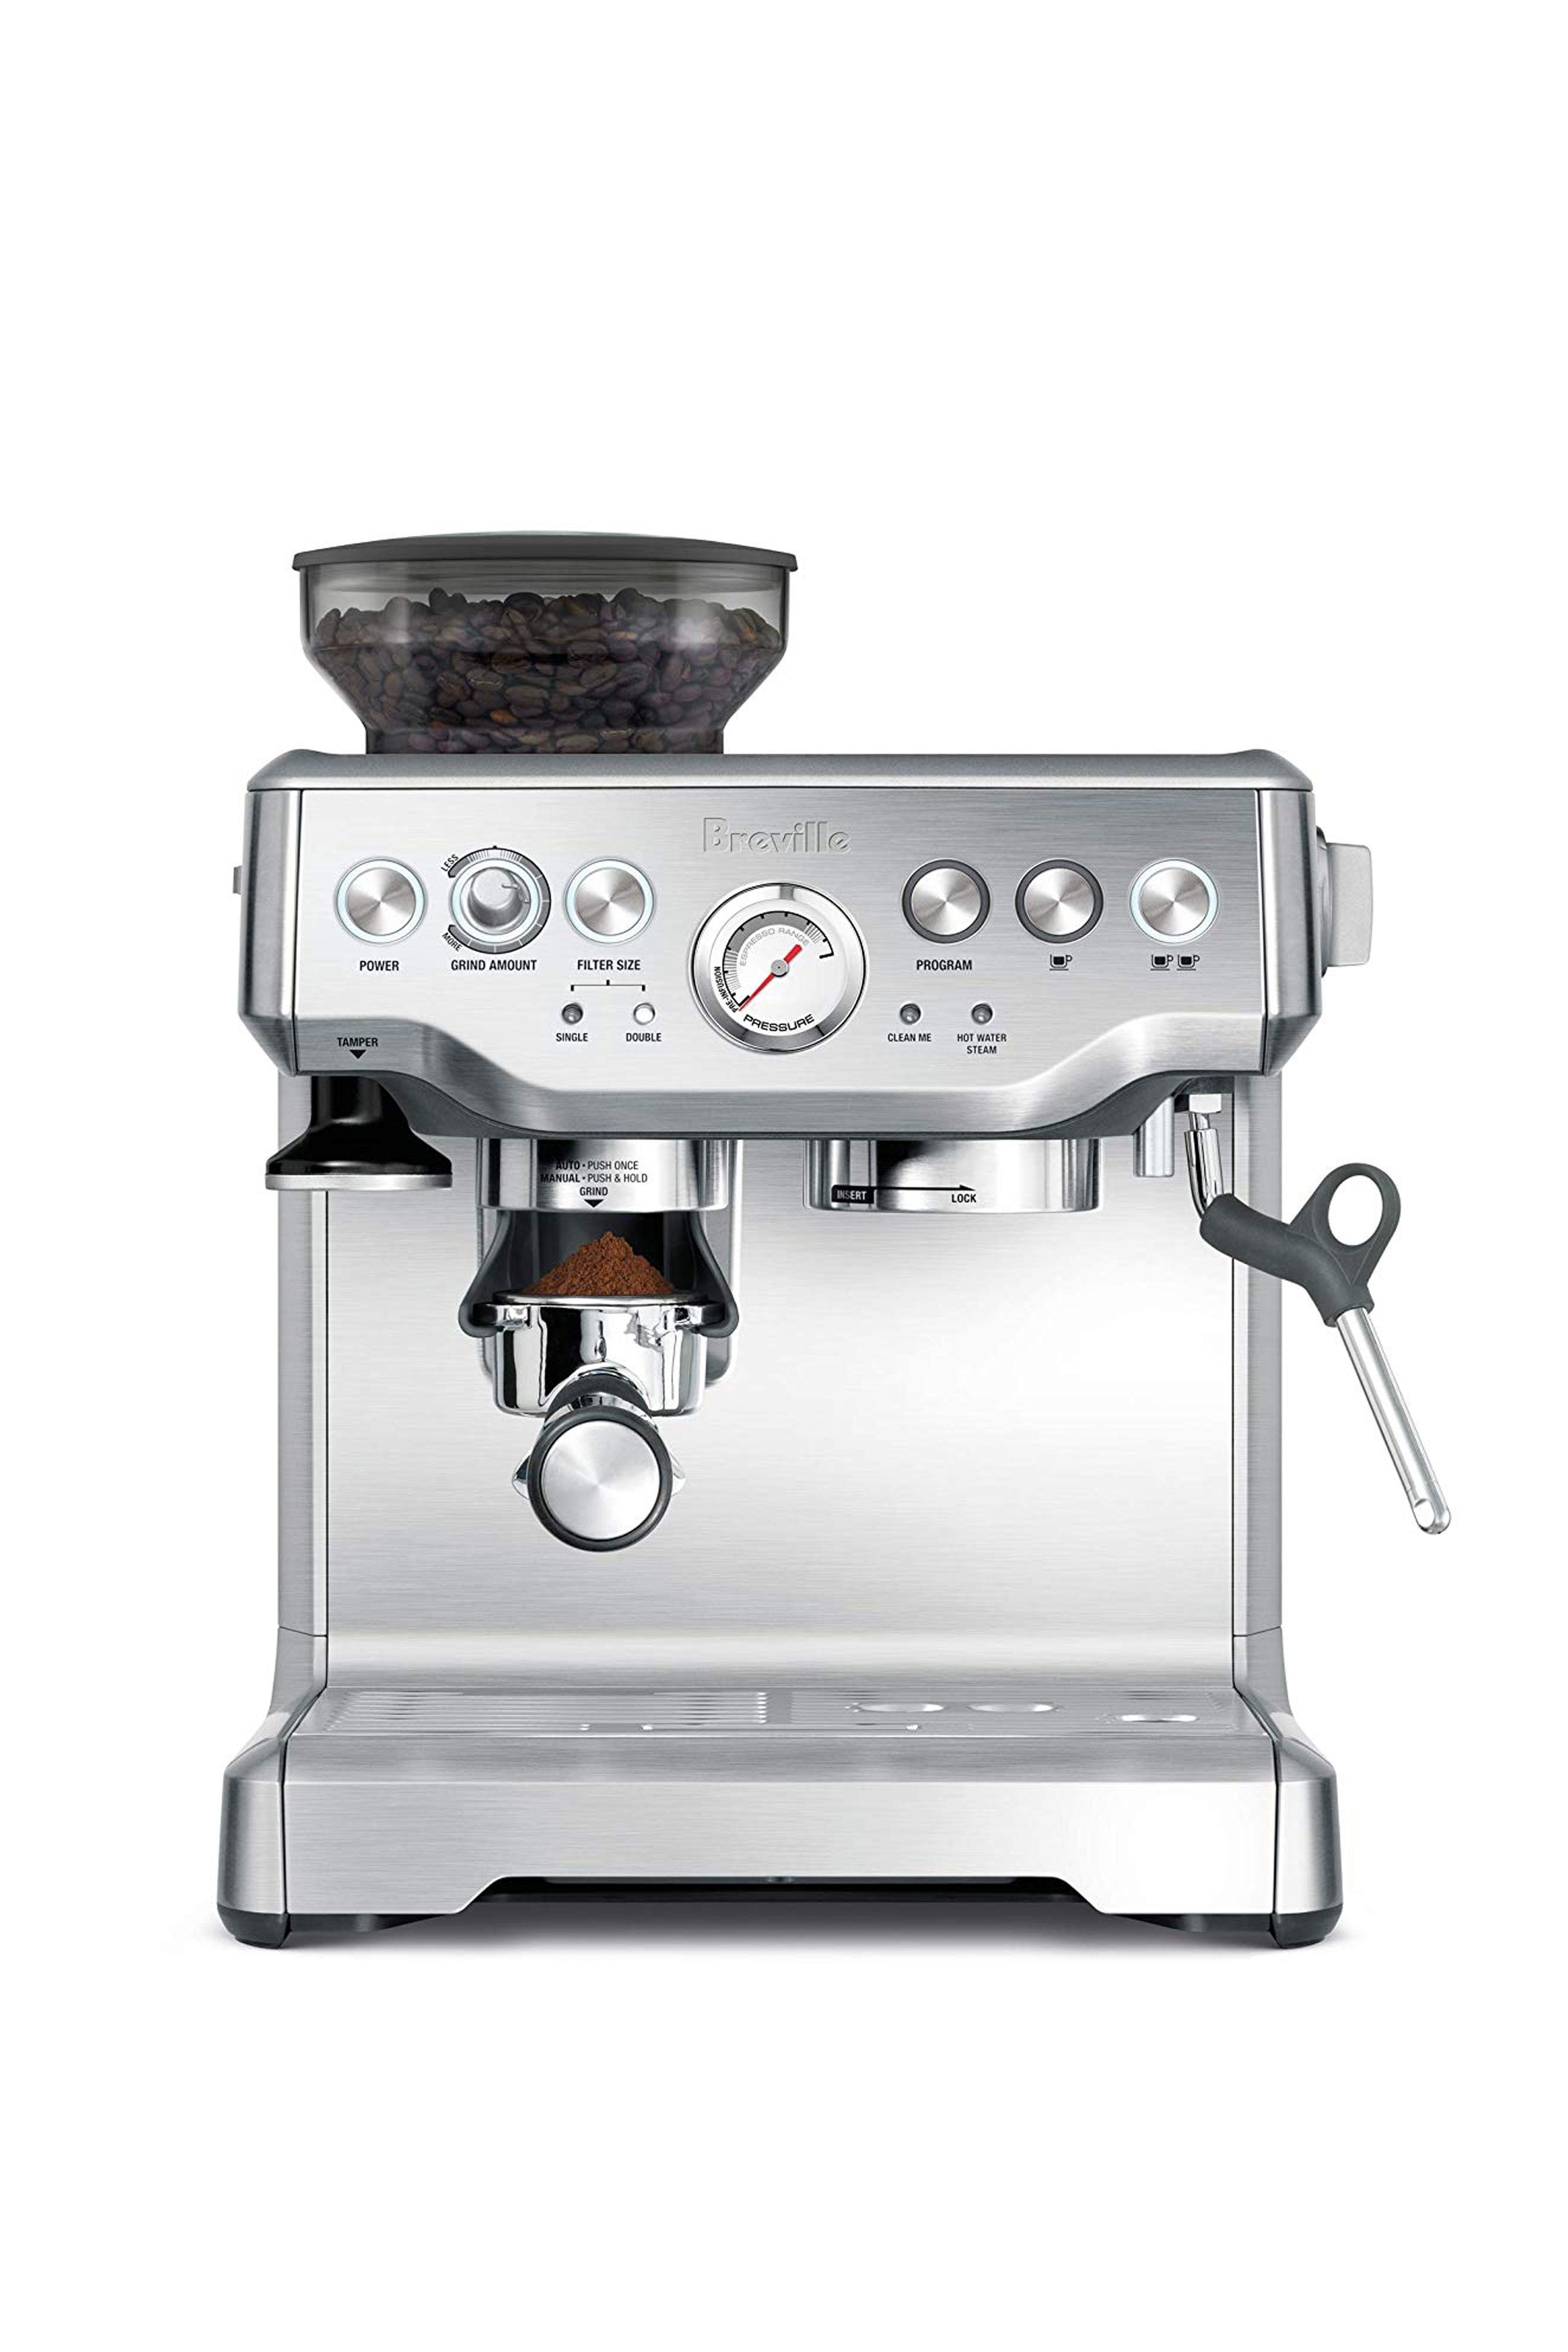 The Espresso Machines of 2020 - Espresso Machines to Buy Online